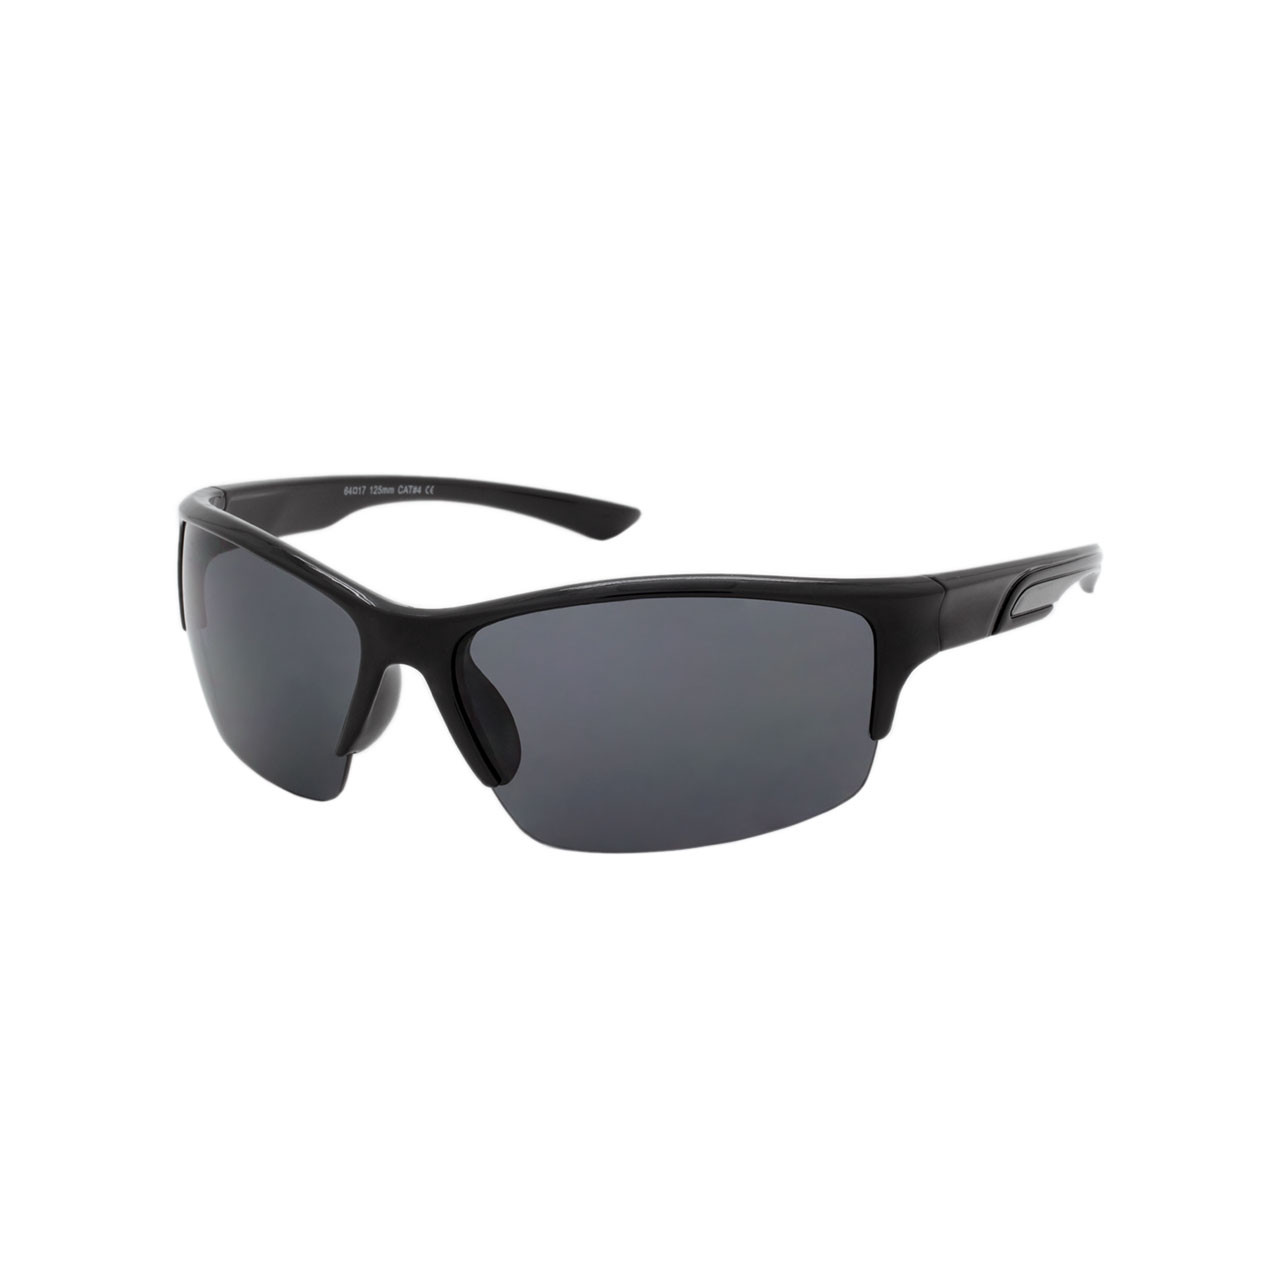 Salice 846 White/Rw Black Idro Polarflex Cat. one size fits all men  Sunglasses : : Sports & Outdoors